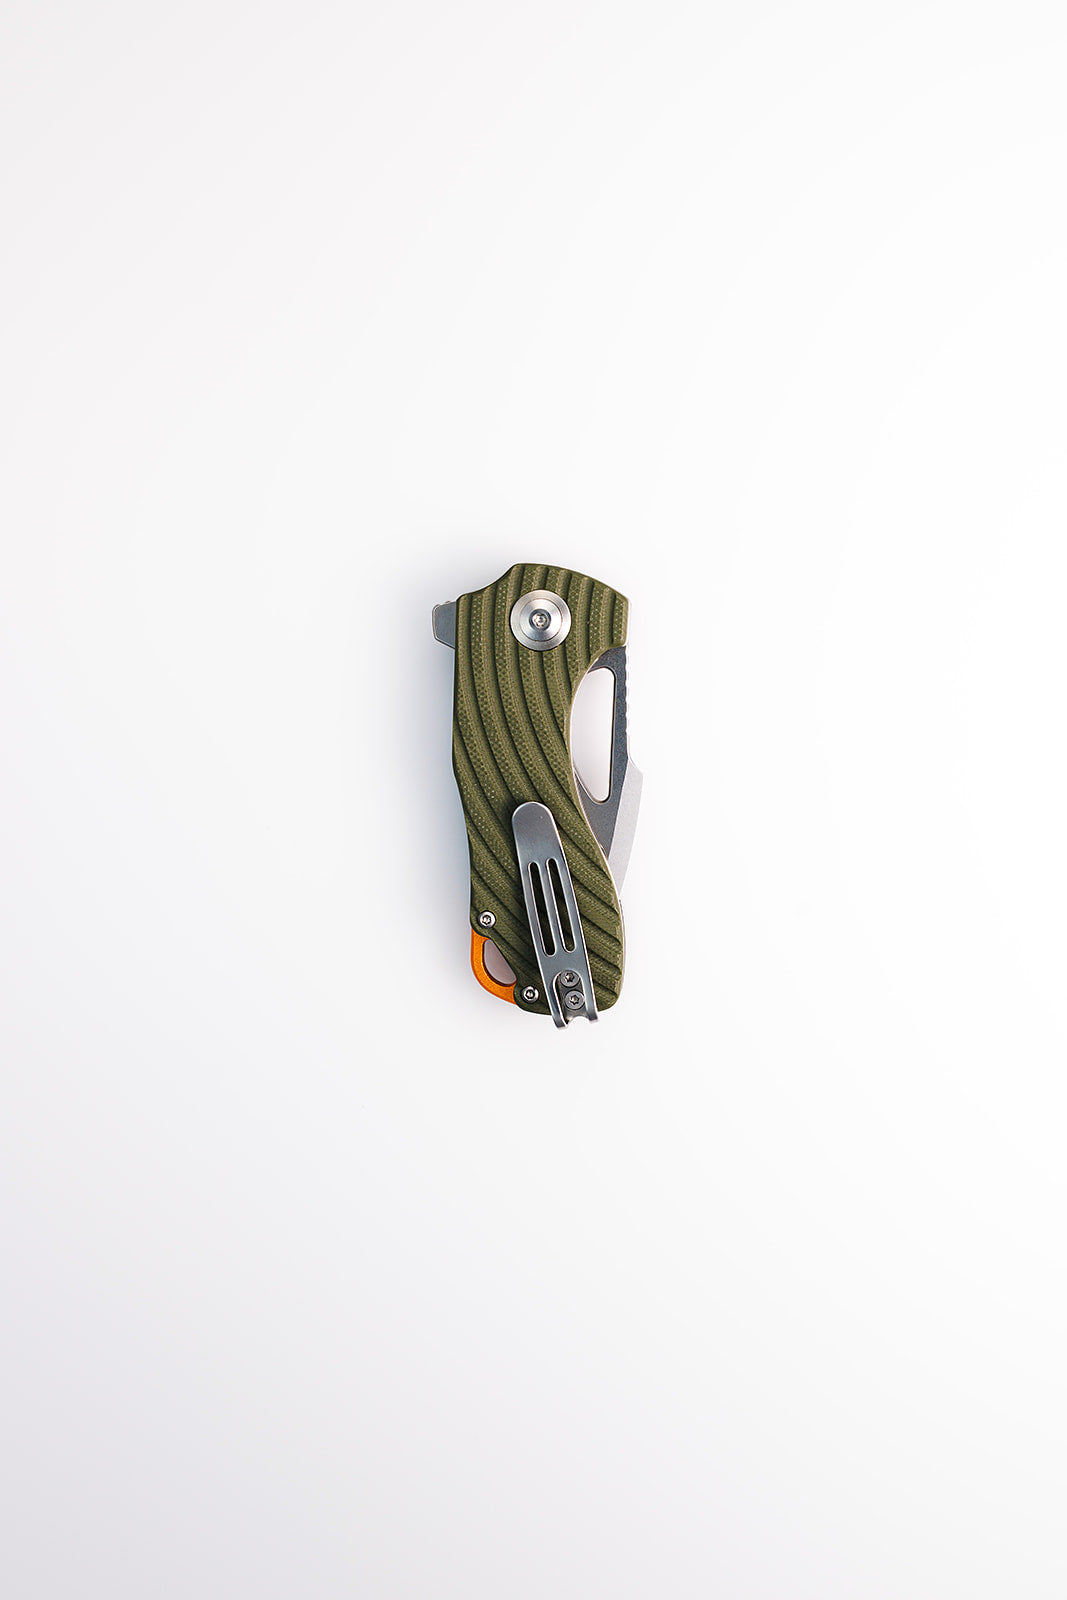 The "Lili" Pocket Knife - 2 - Koi Knives